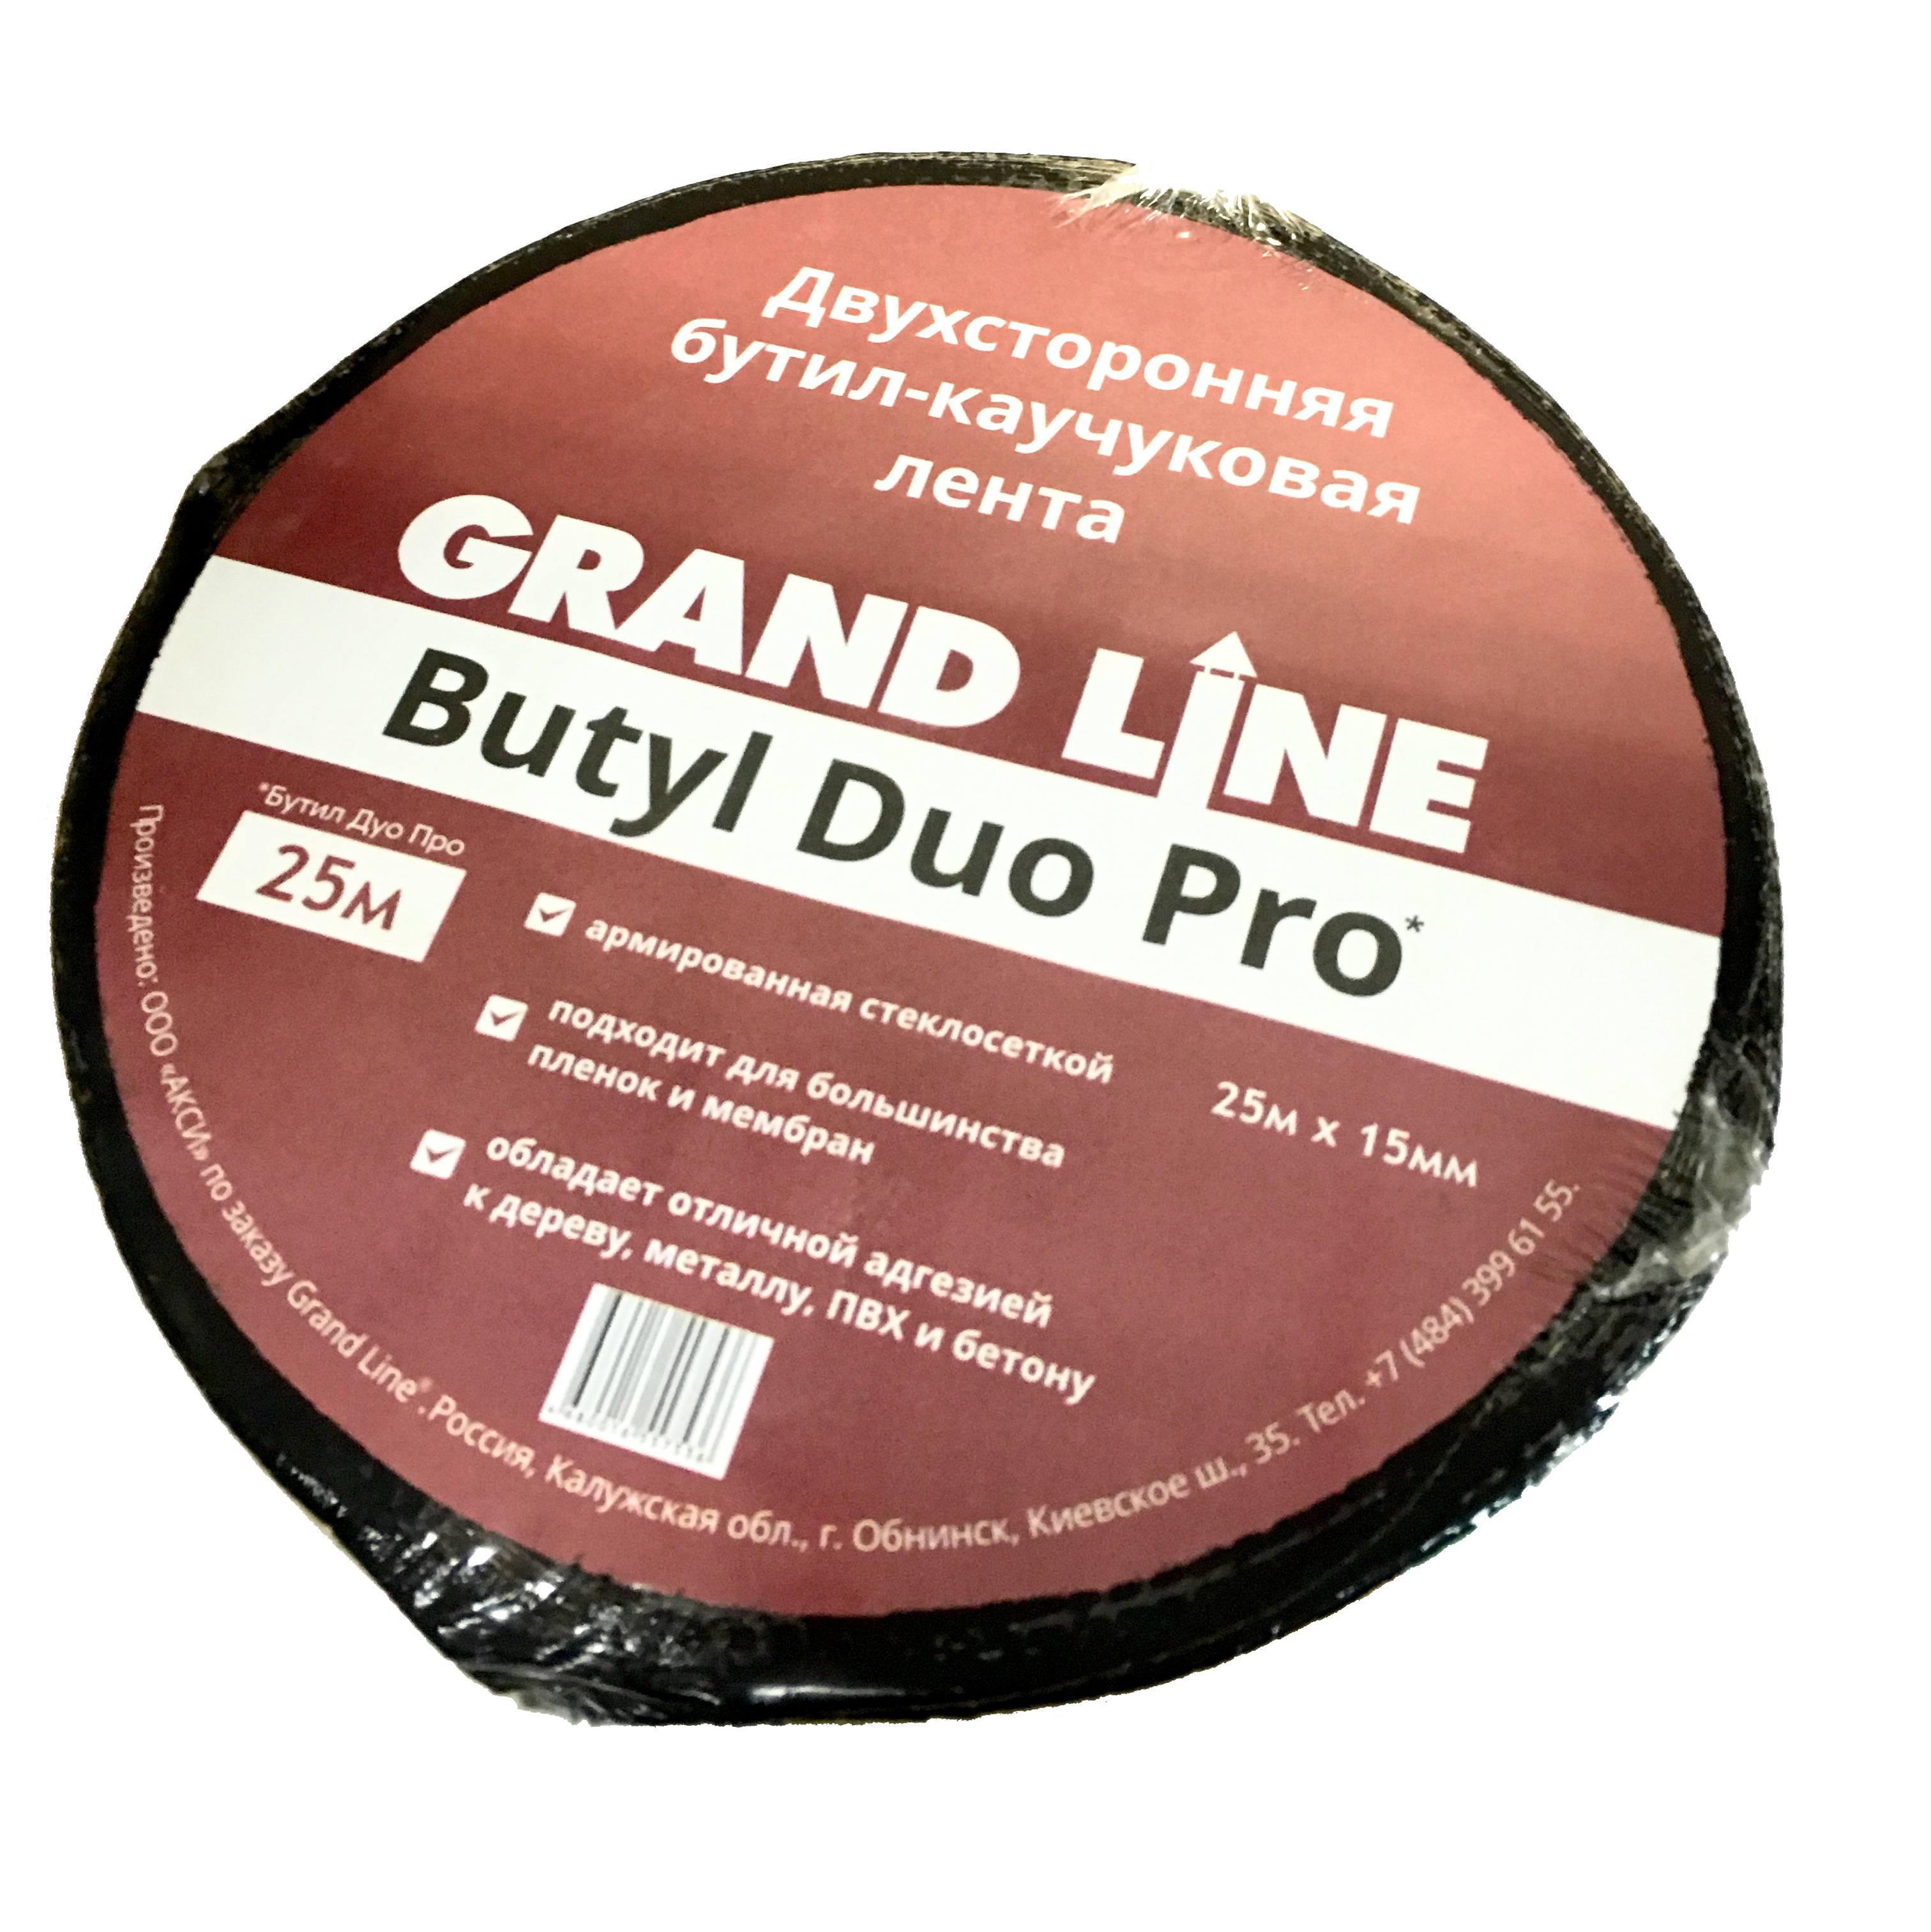 Лента двухсторонняя бутил-каучуковая Grand Line BUTYL DUO PRO (25 м)